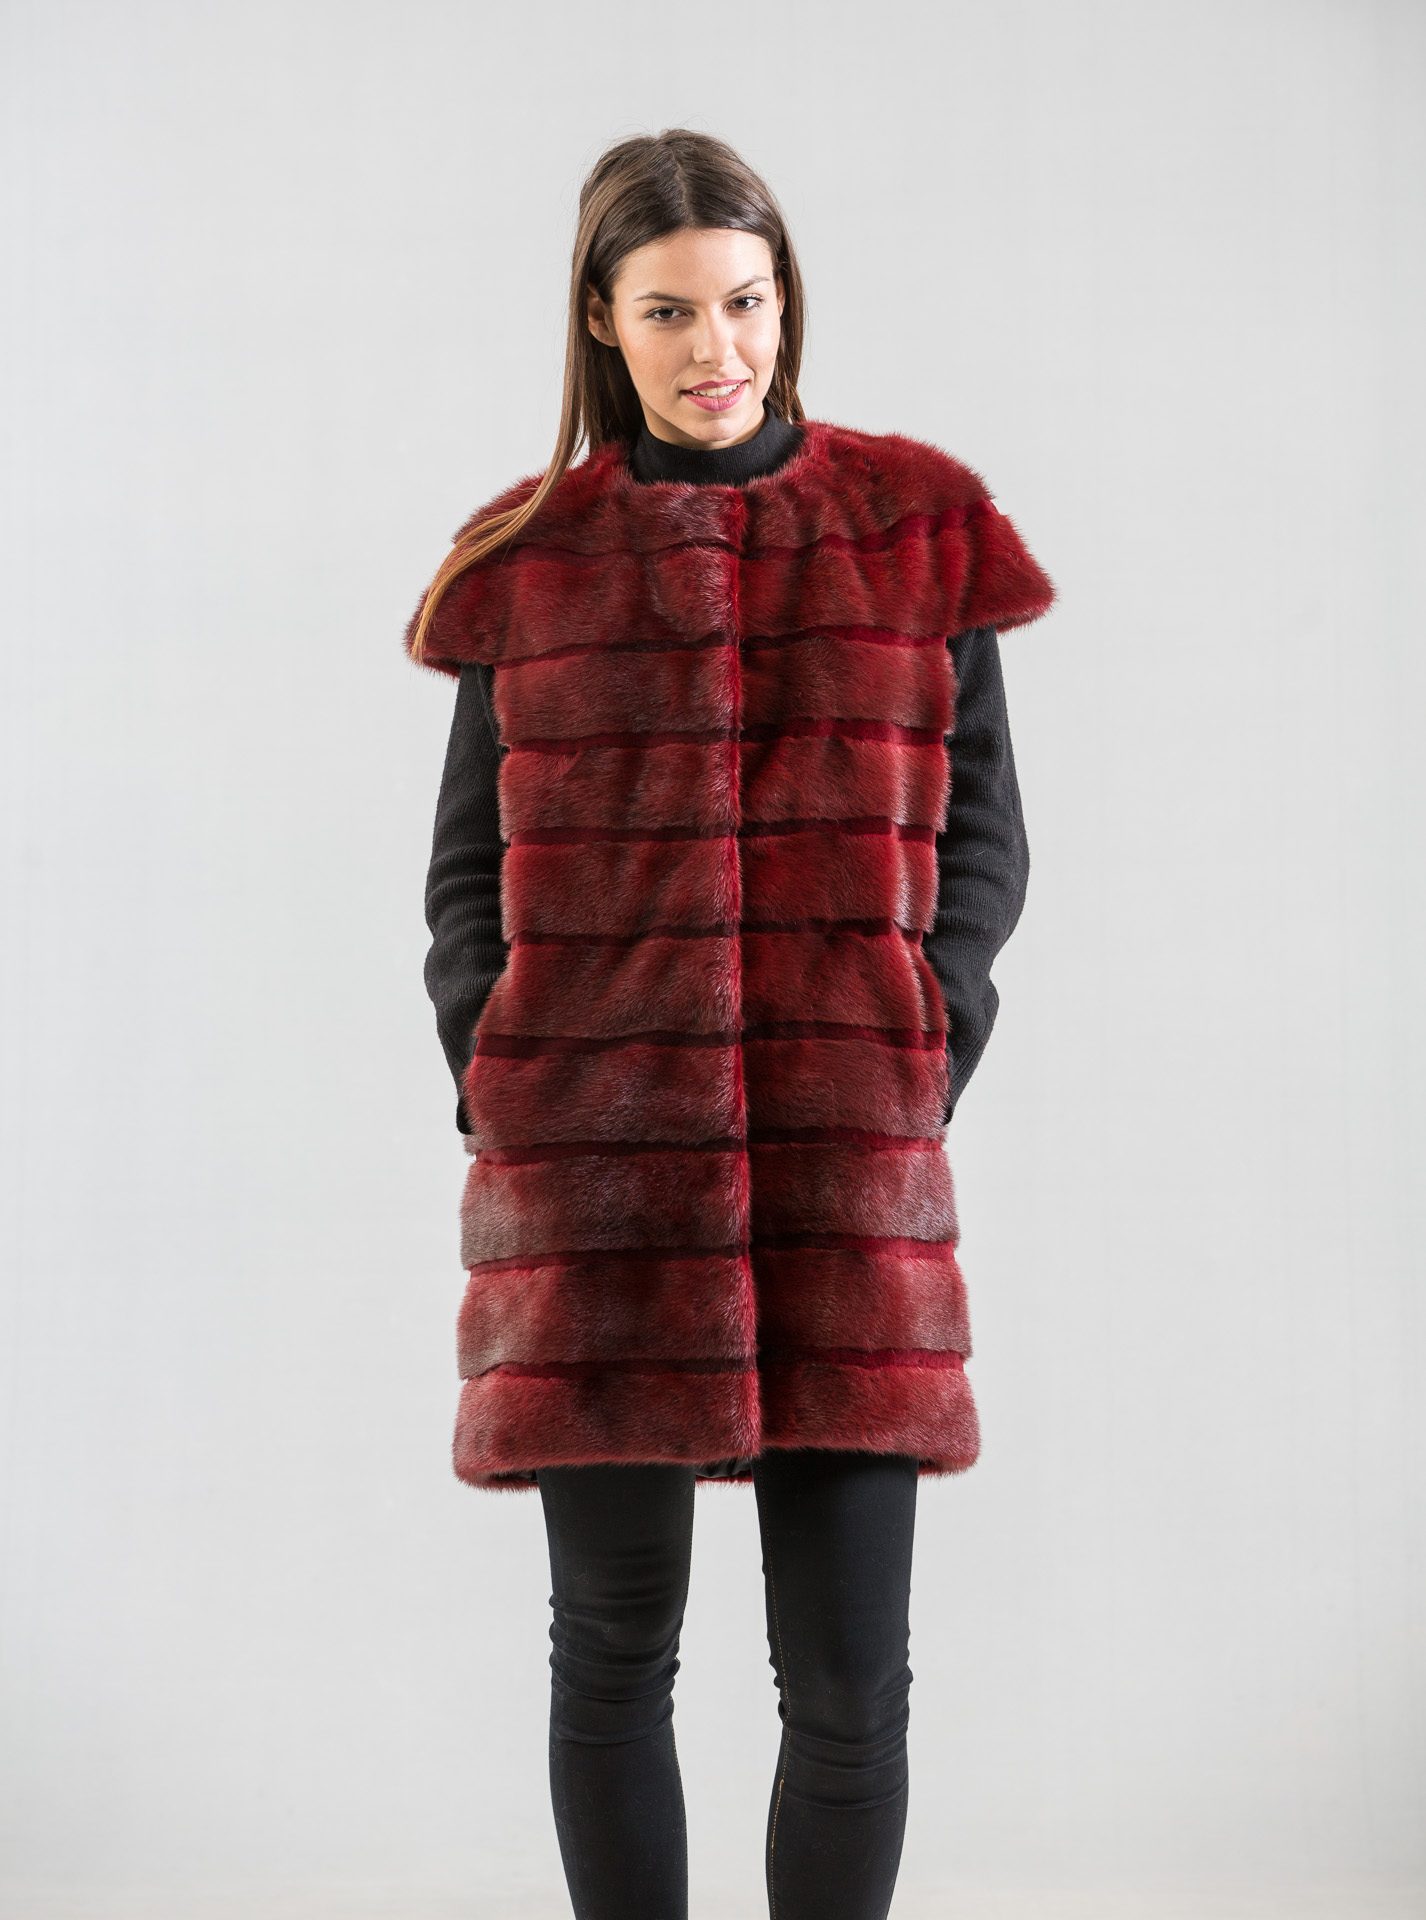 Dark Red Mink Fur Vest. 100% Real Fur Coats and Accessories.